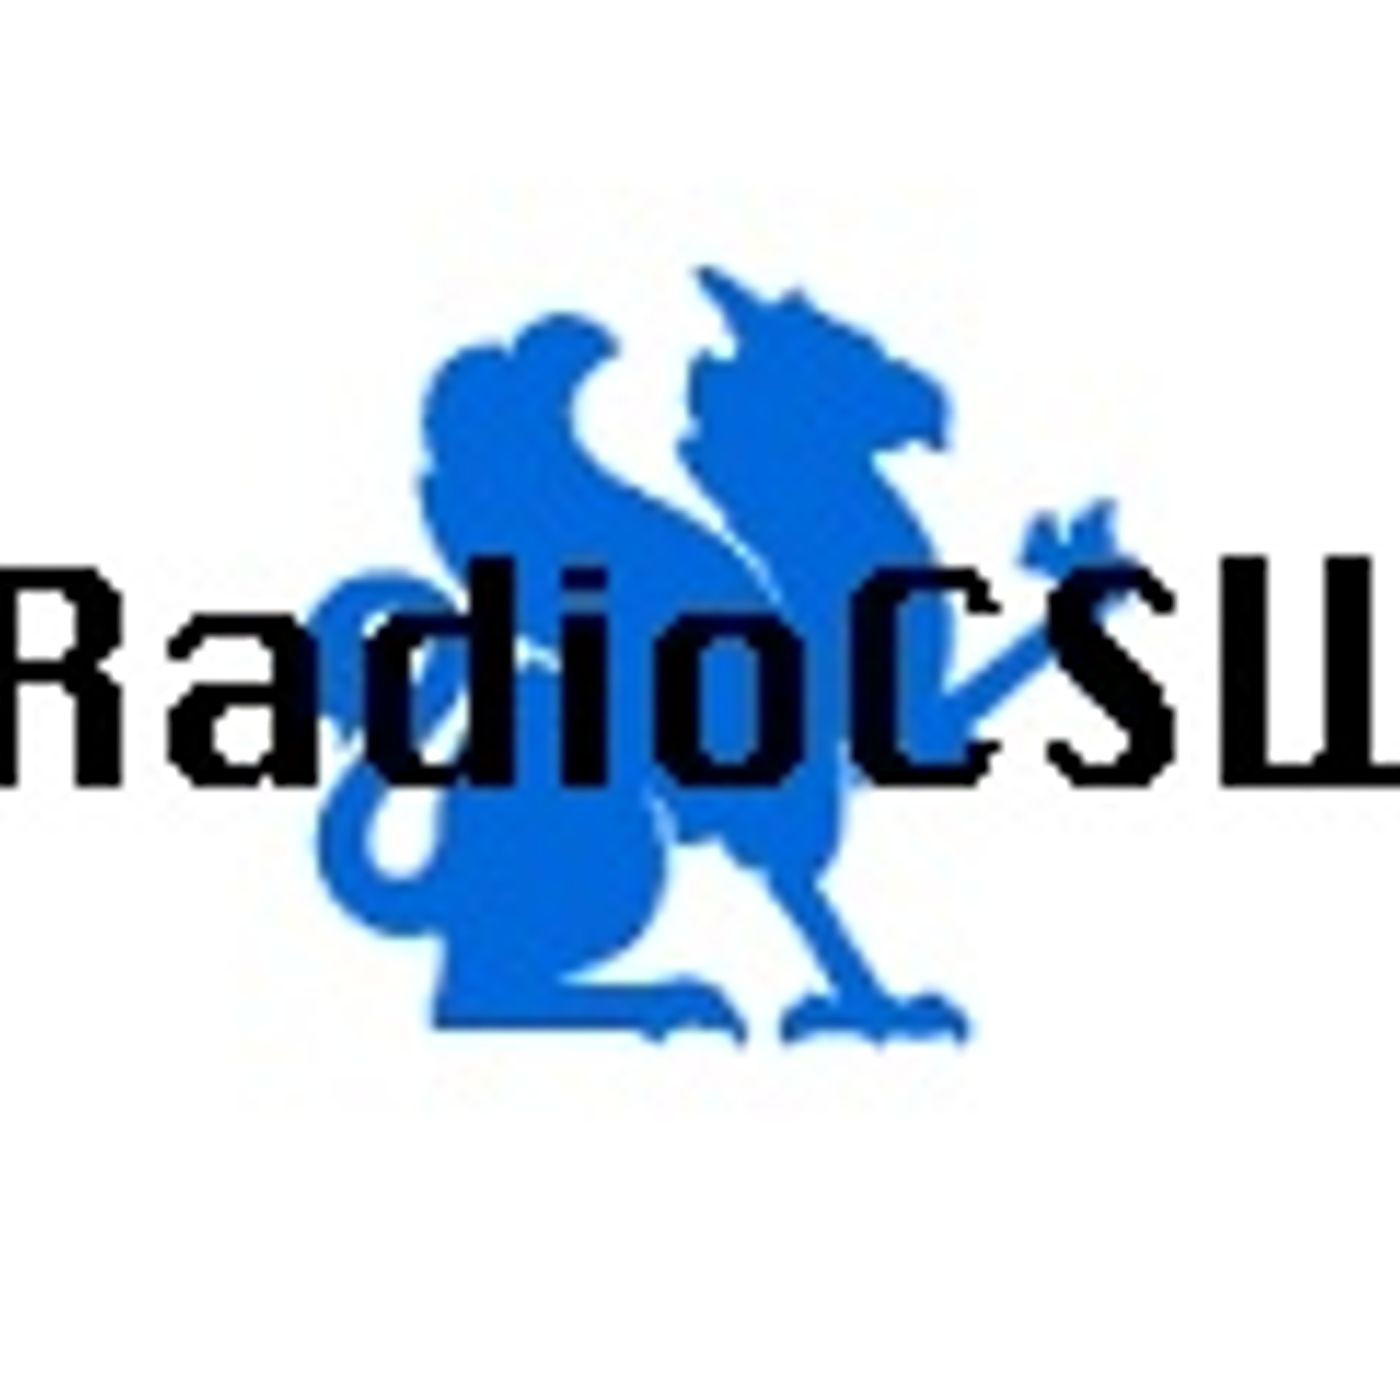 RadioCSW will launch tomorrow D-block